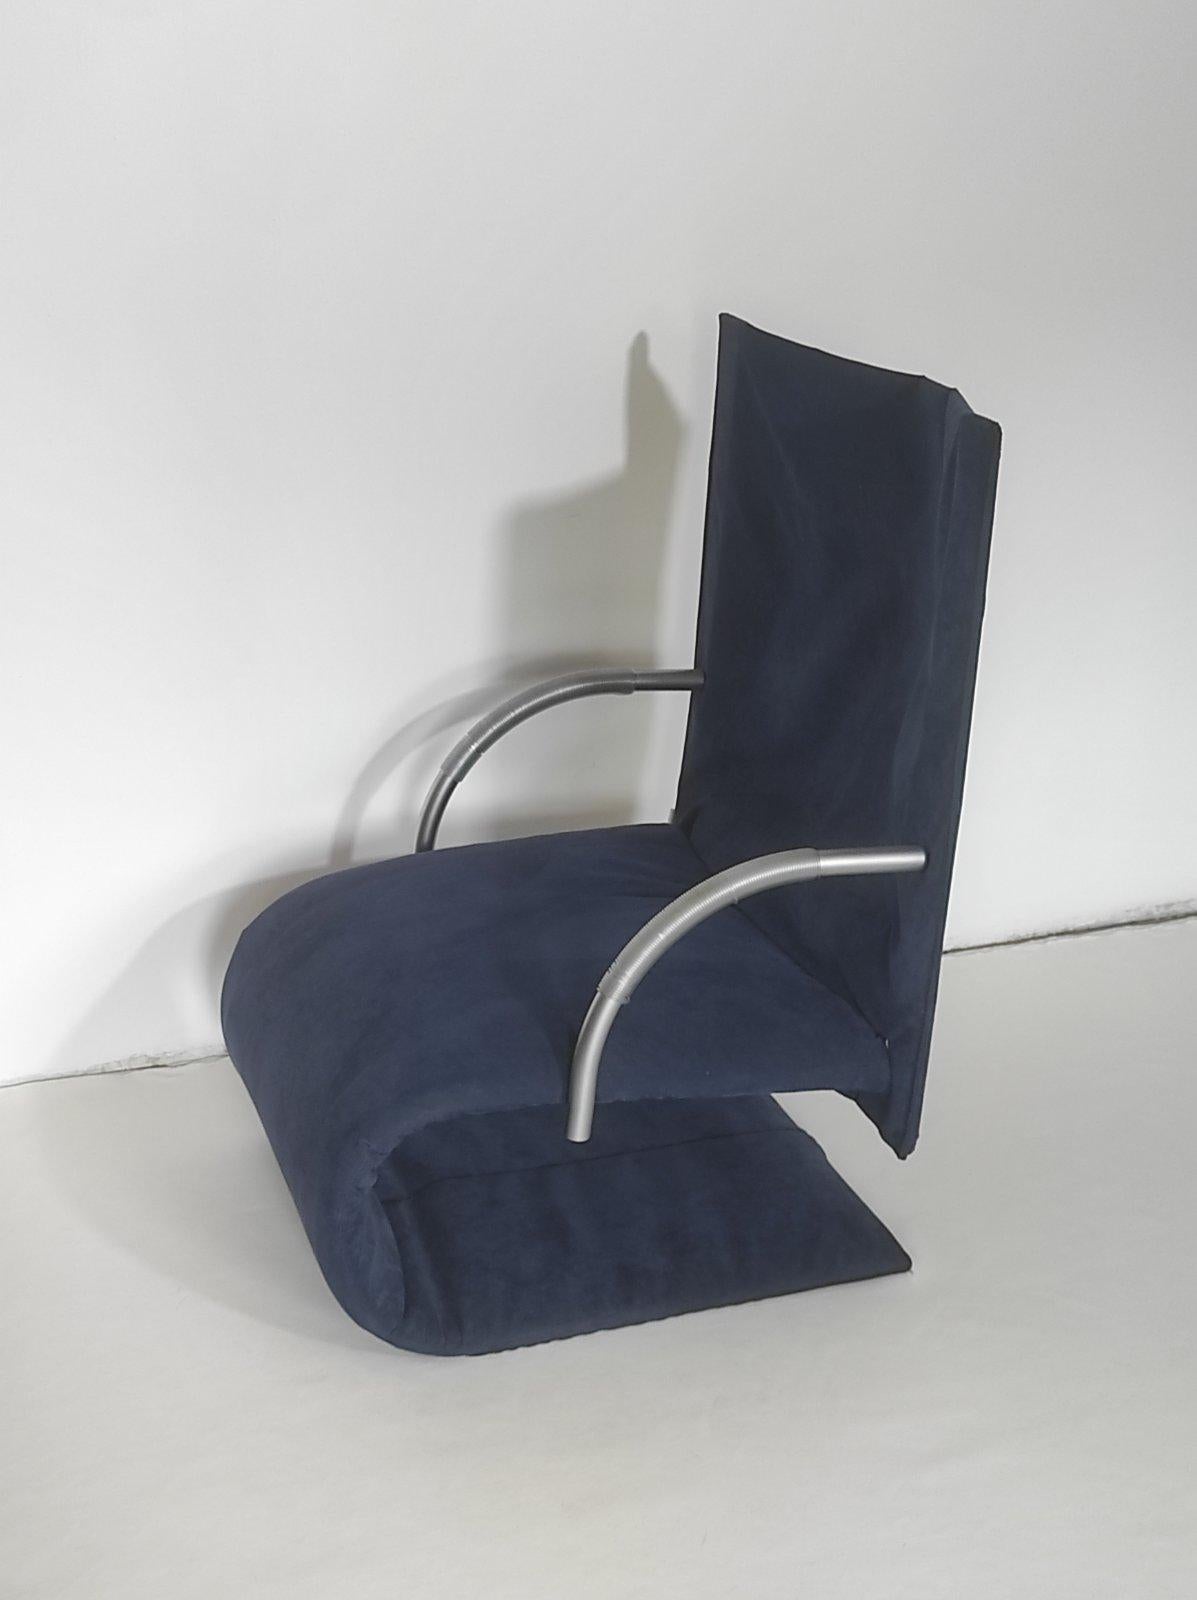 Zen Chair By Claude Brisson for Ligne Roset 1980s